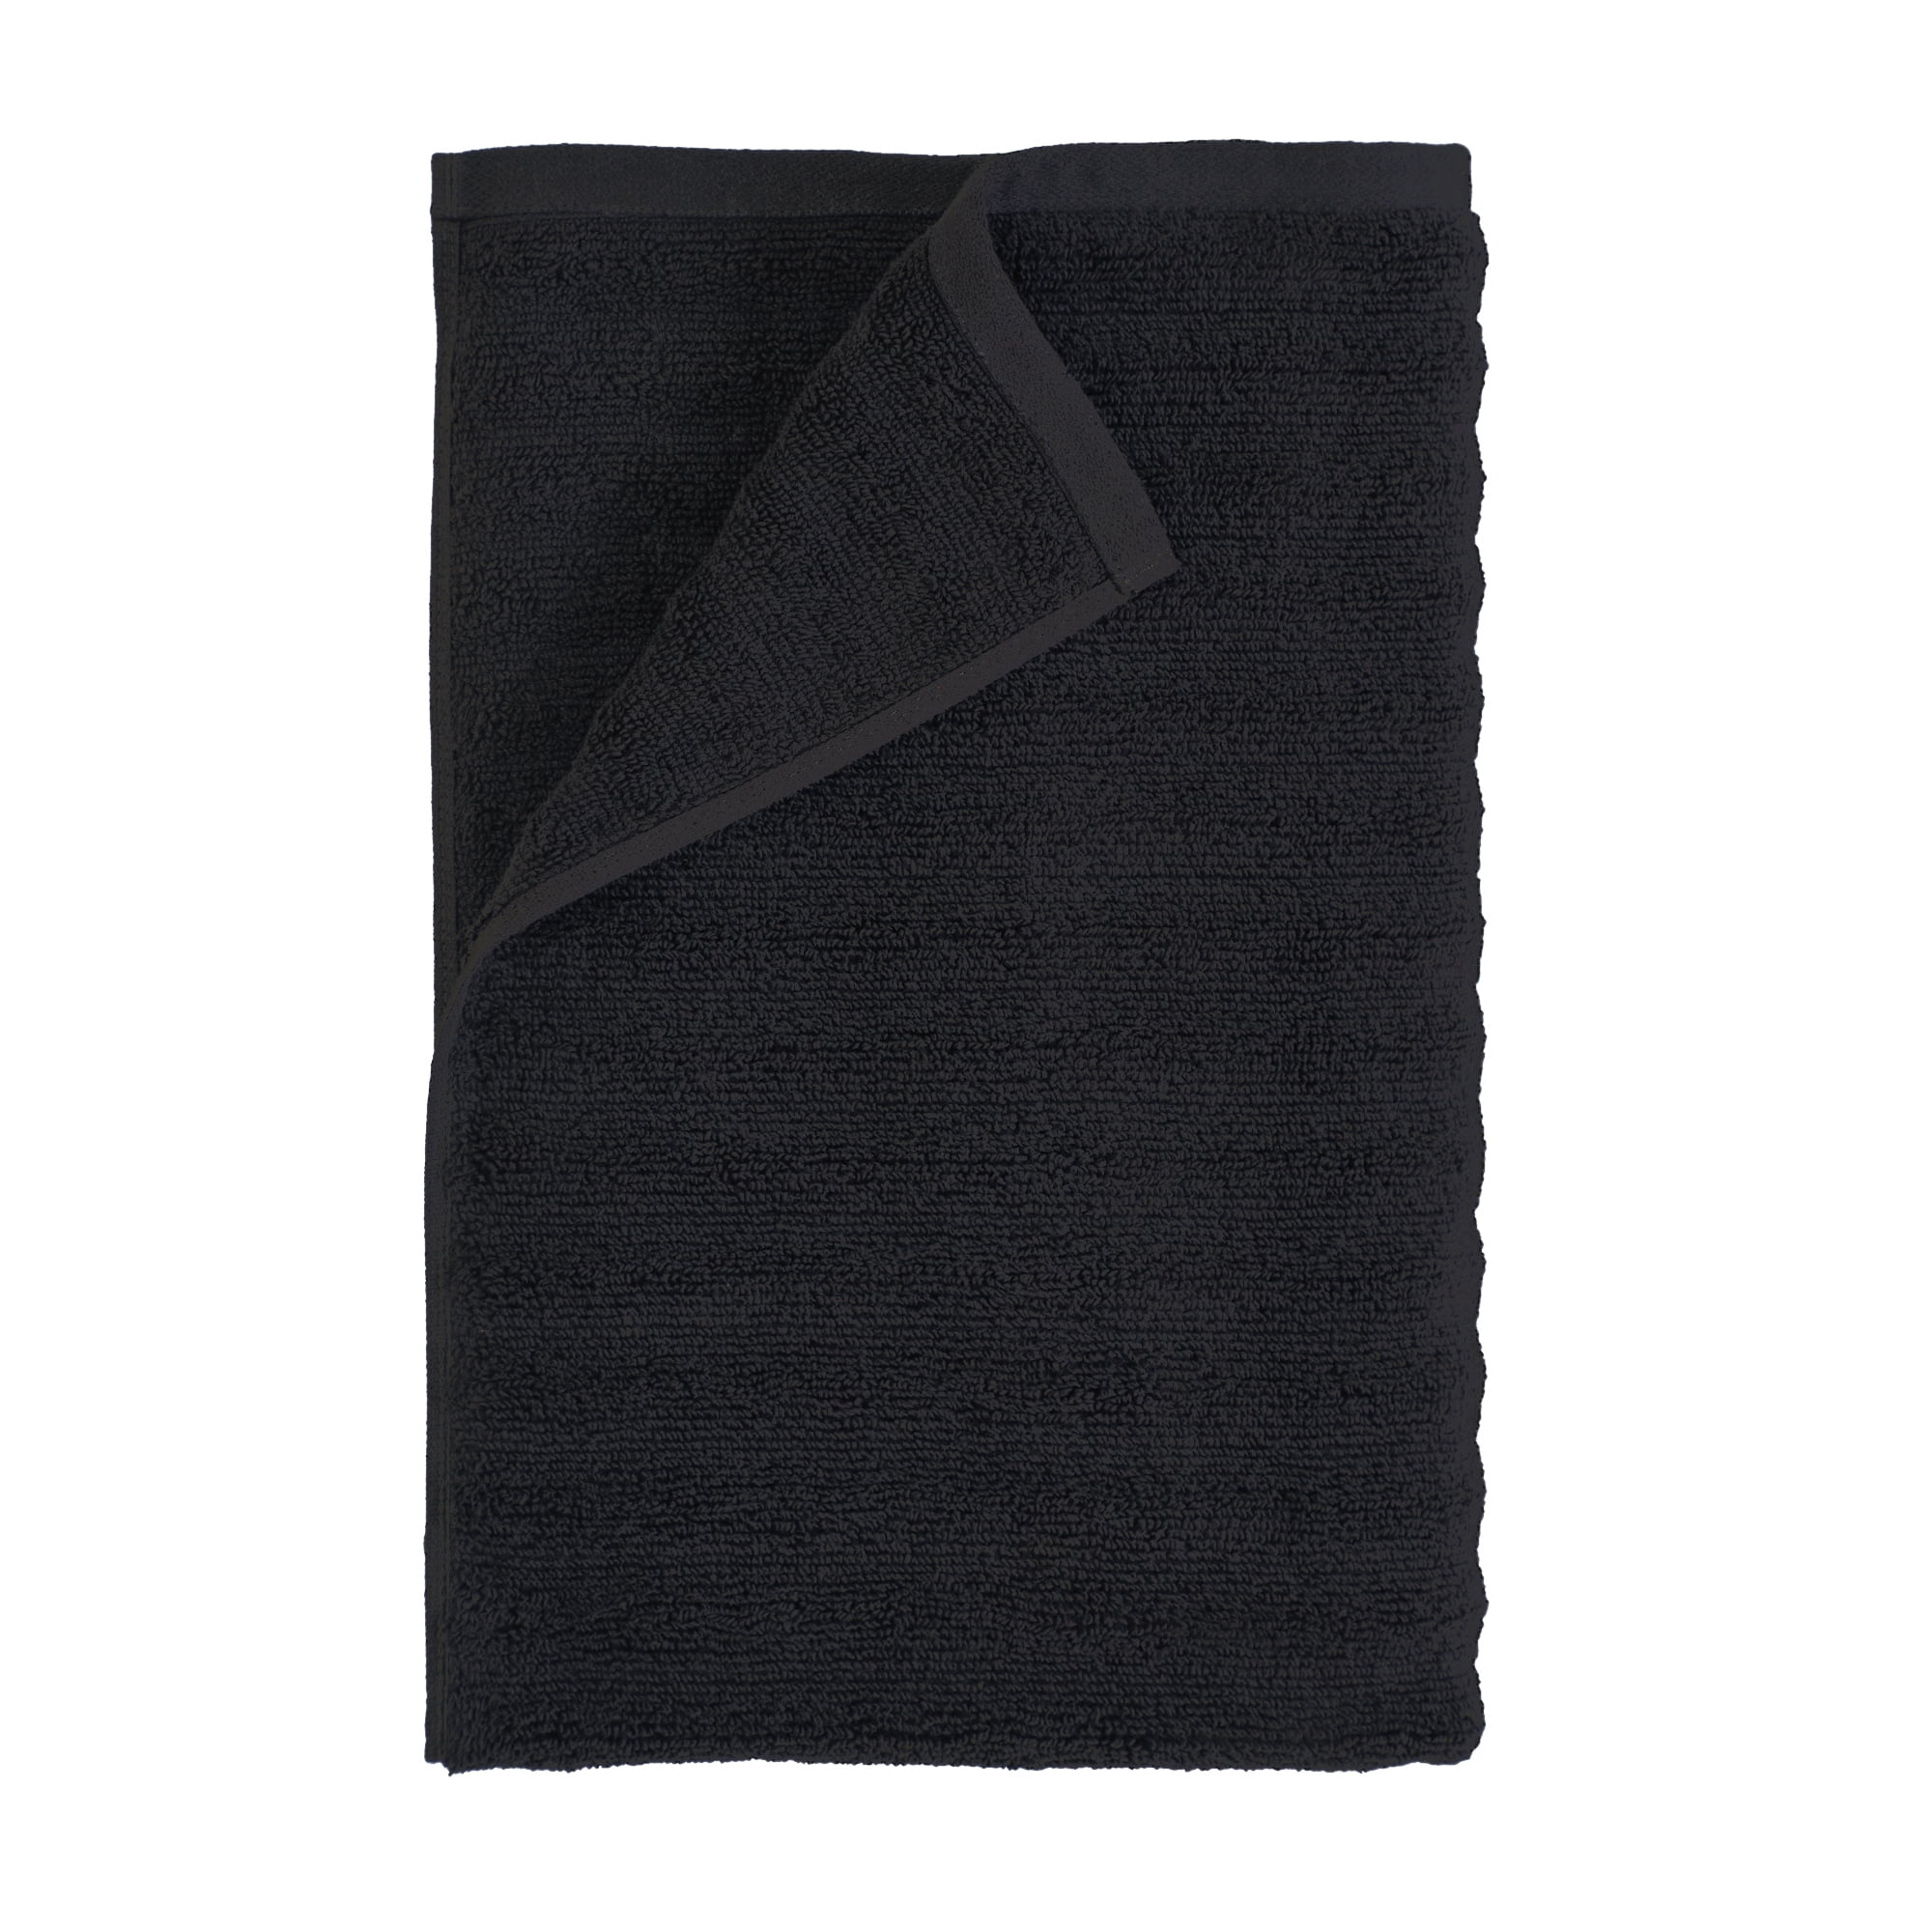 Basics Odor Resistant Textured Bath Towel Set - 6-Pieces, Cotton,  Assorted, Dark Grey, 54 L x 30 W